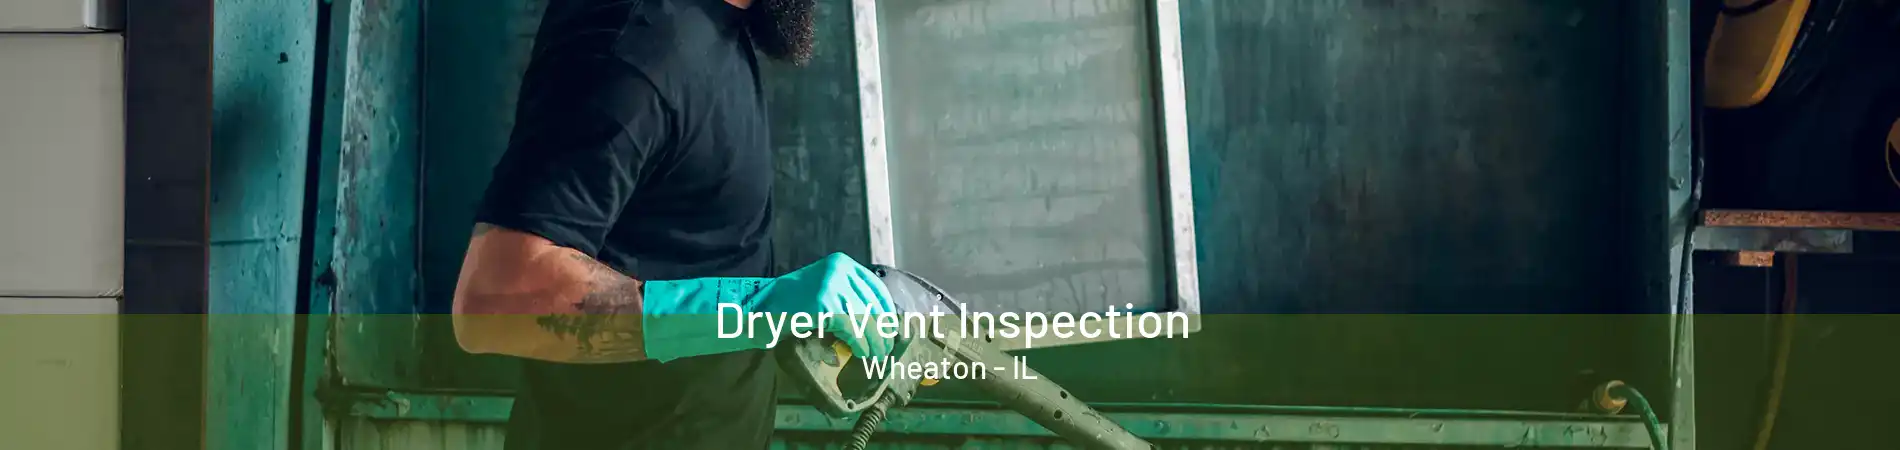 Dryer Vent Inspection Wheaton - IL